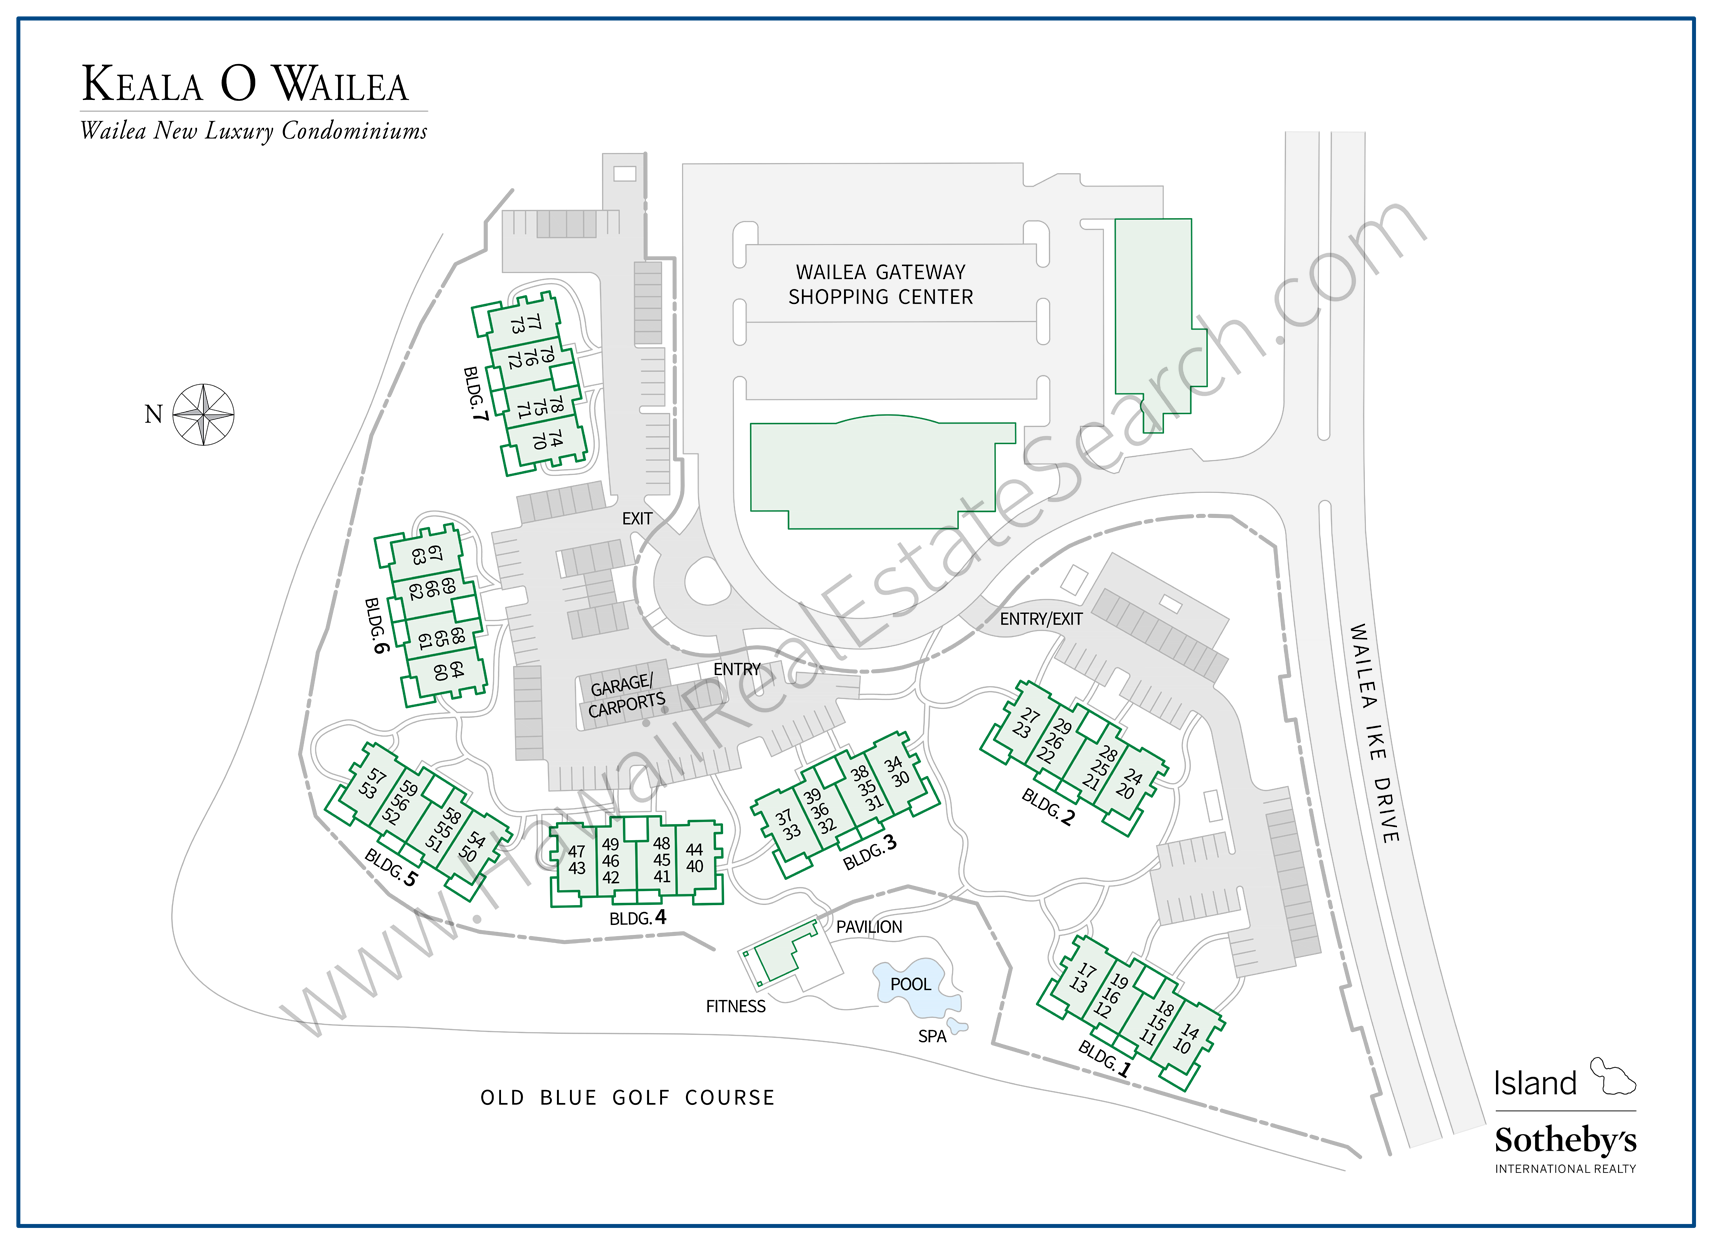 Keala O Wailea Map 2018